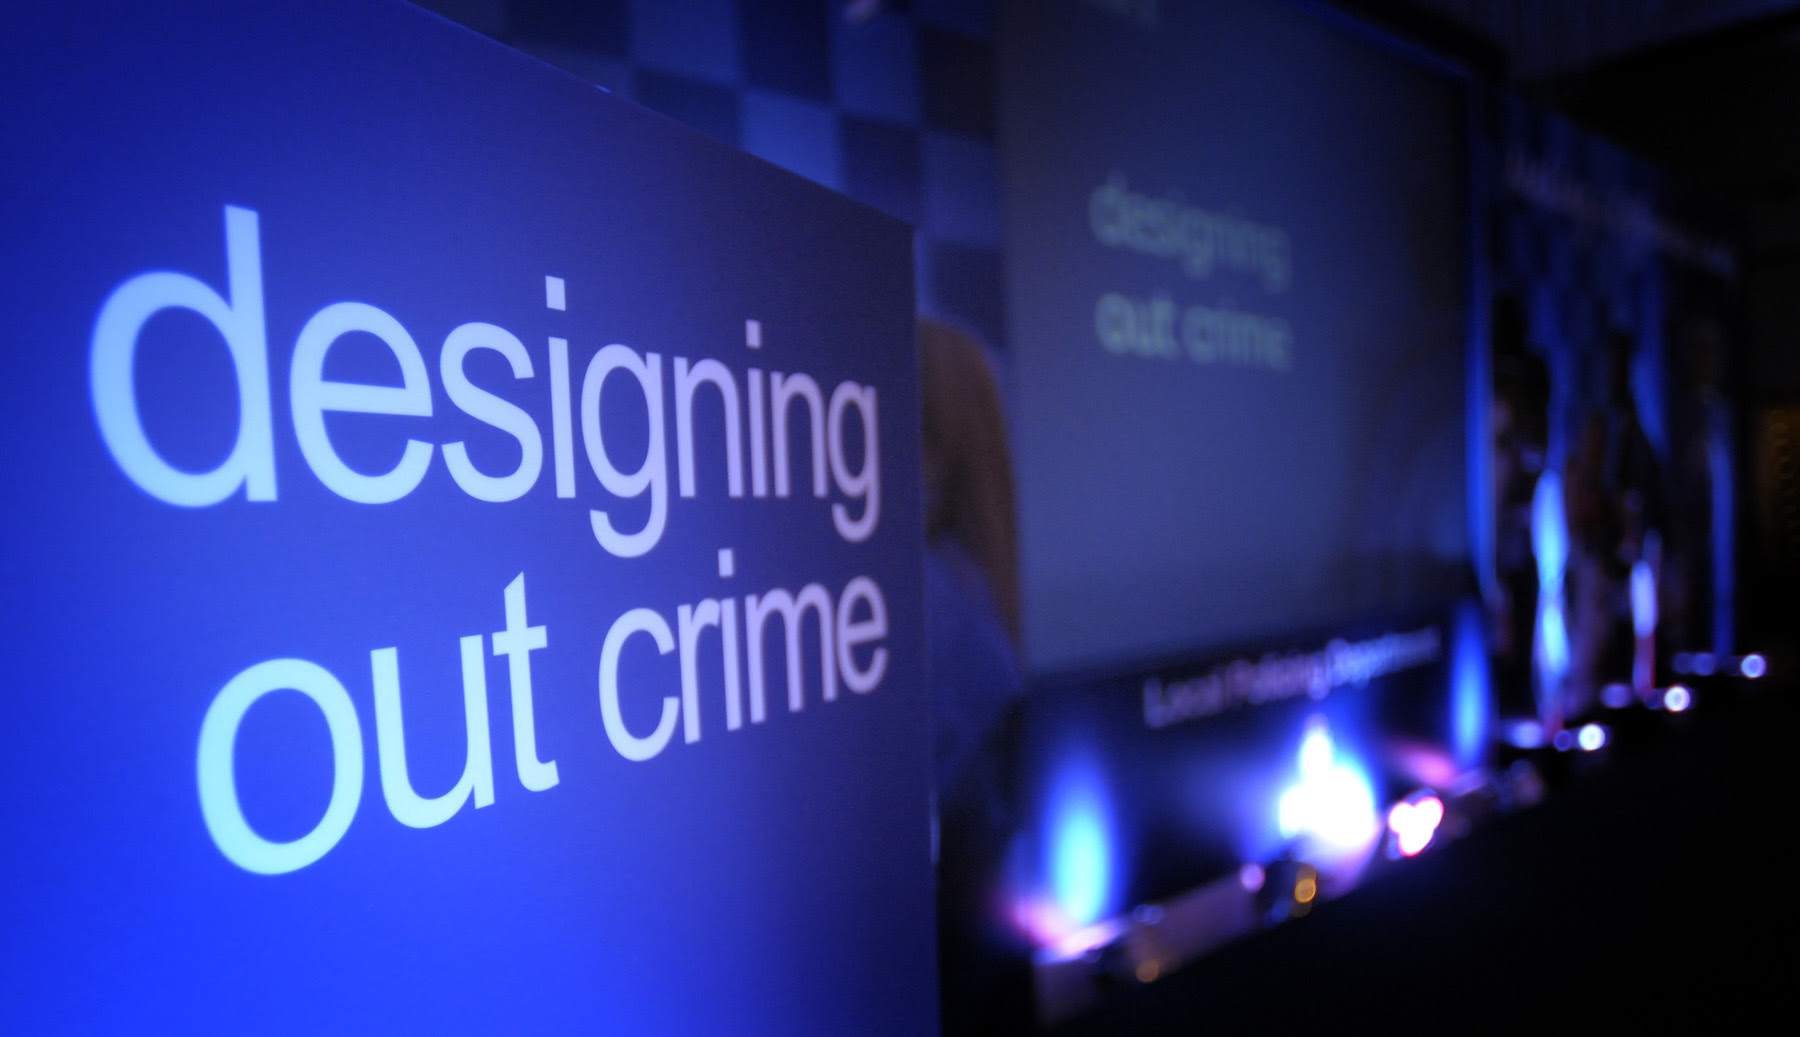 Designing out crime